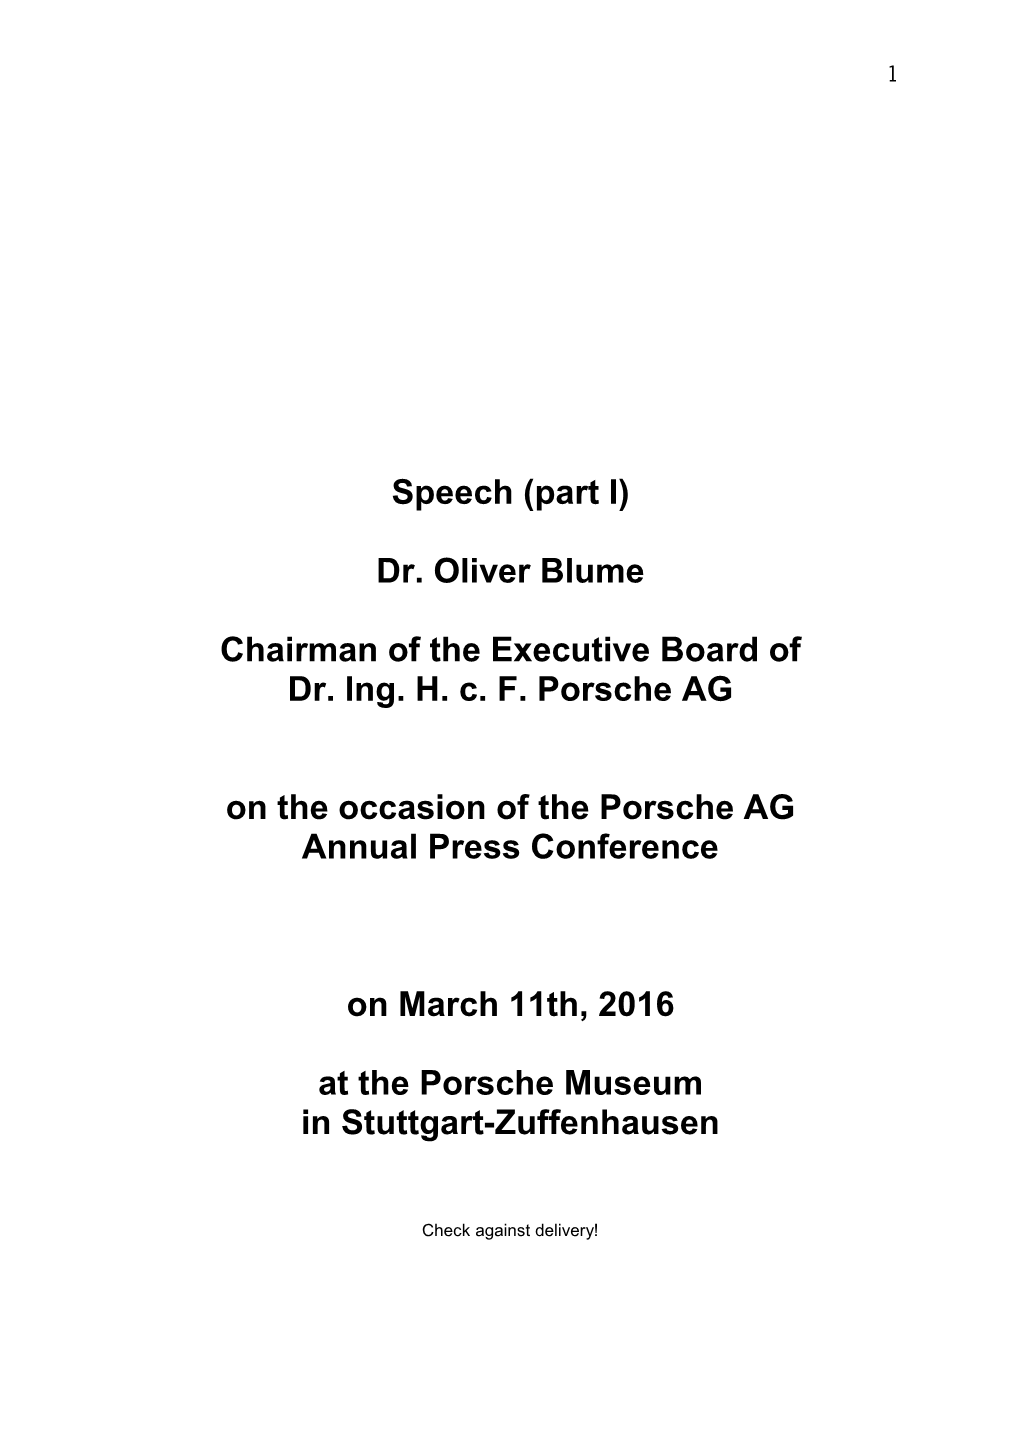 Speech (Part I) Dr. Oliver Blume Chairman